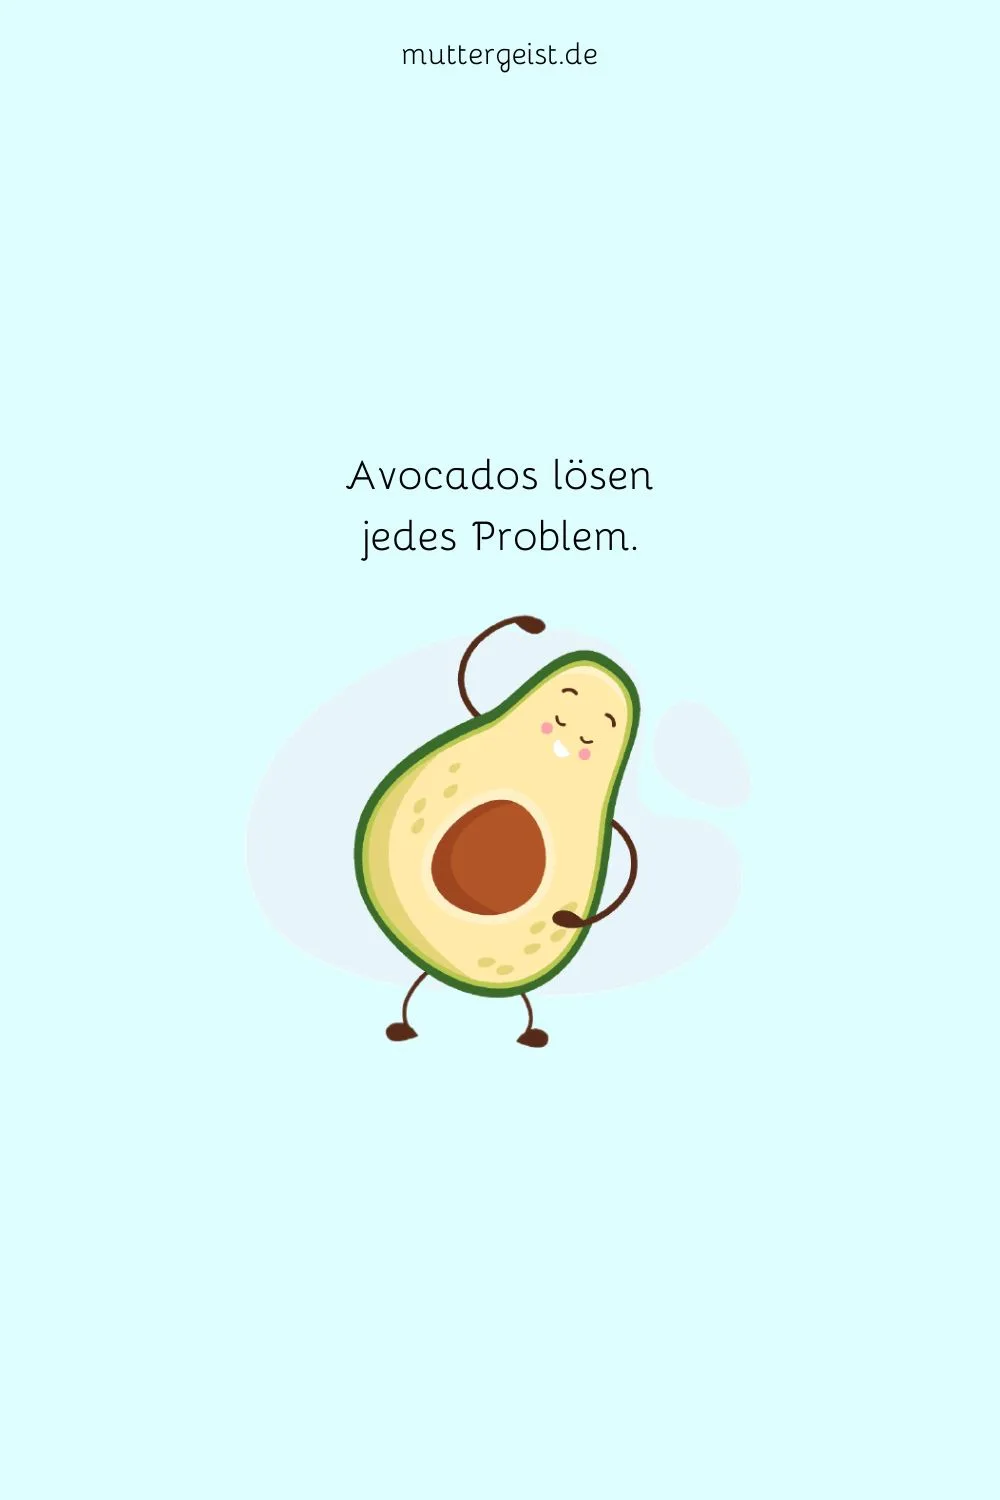 Avocados lösen jedes Problem